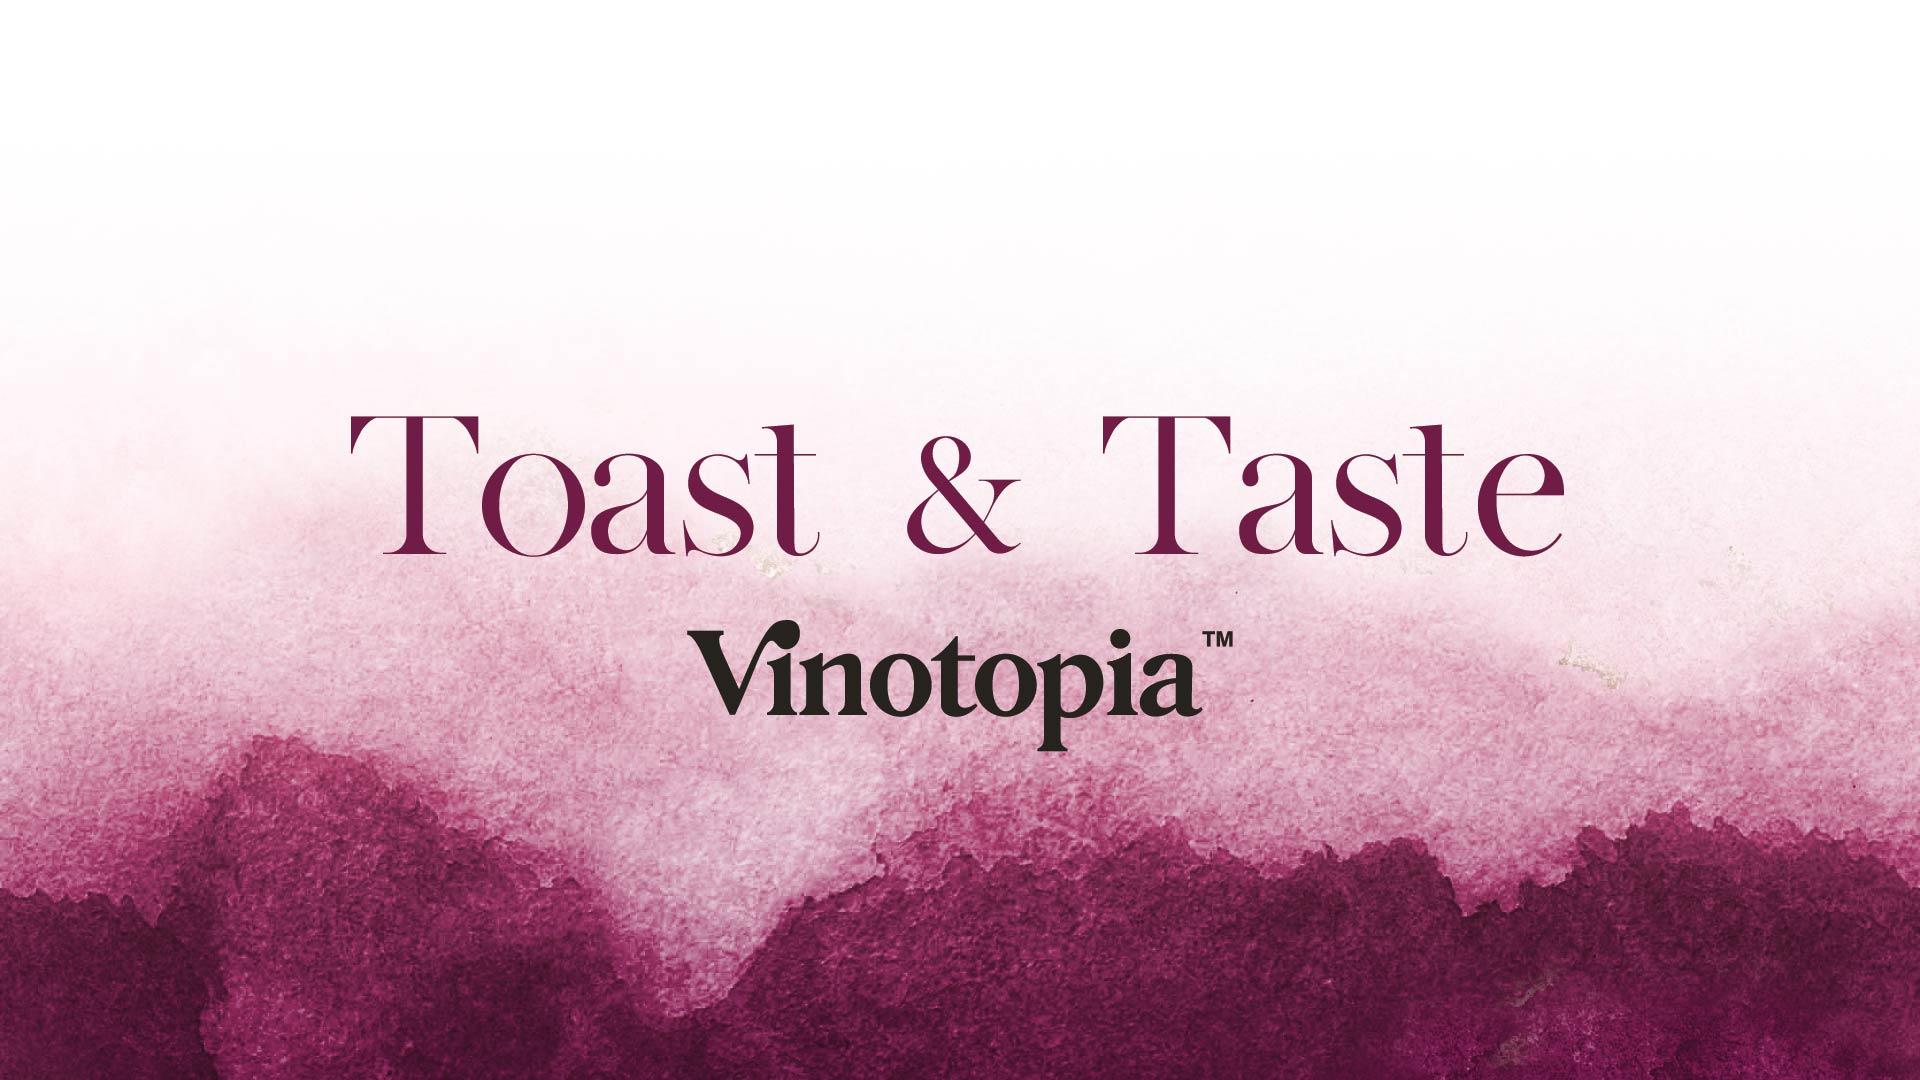 Toast & Taste at Vinotopia - hero